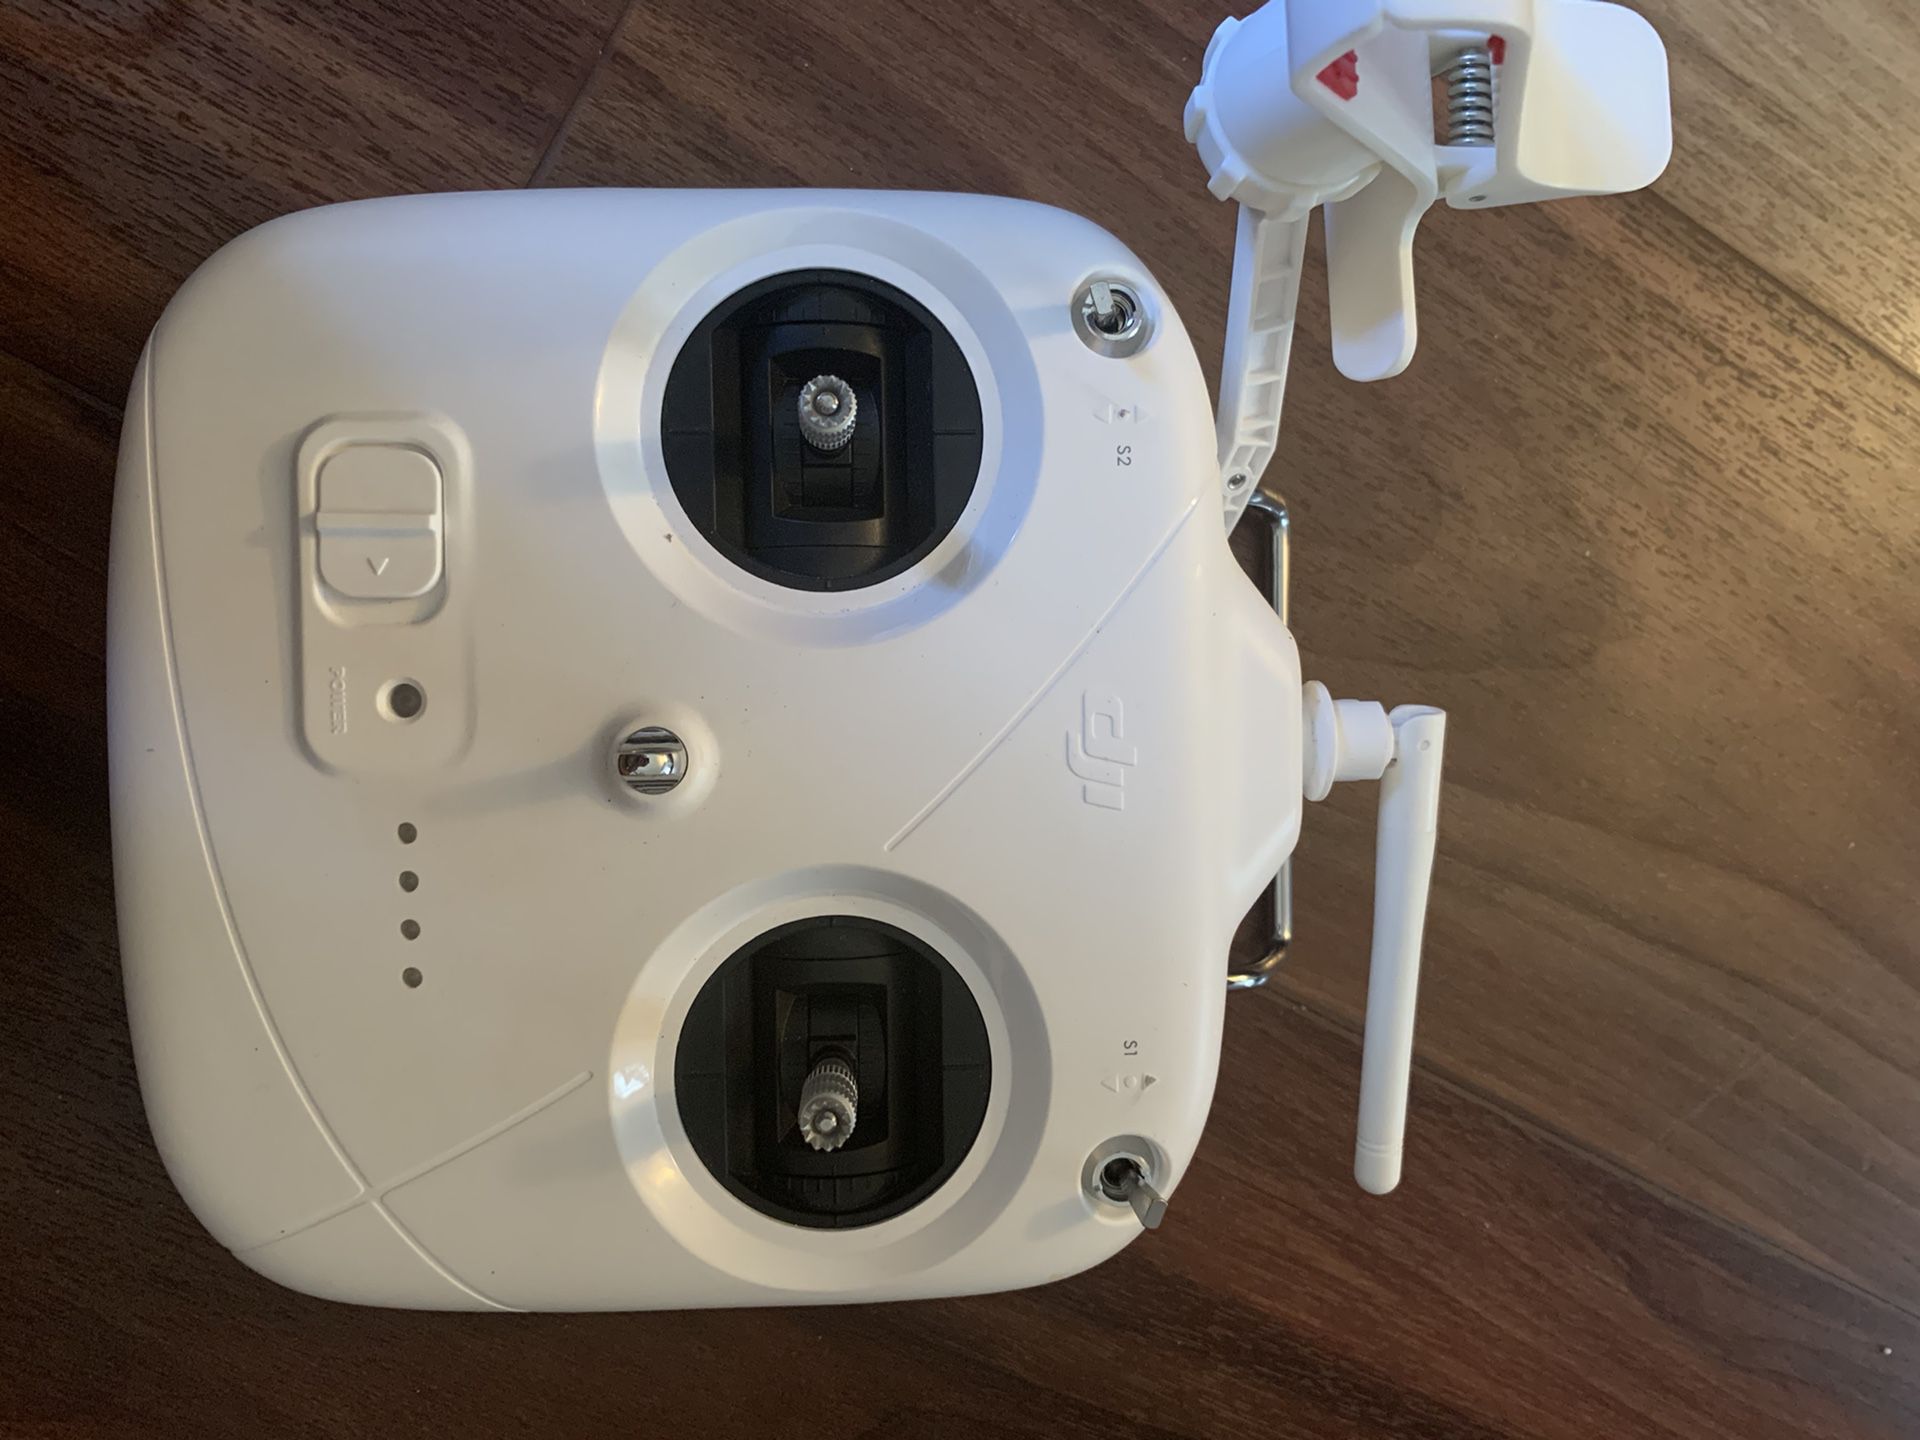 DJI Phantom 3 Standard Drone With Accessories